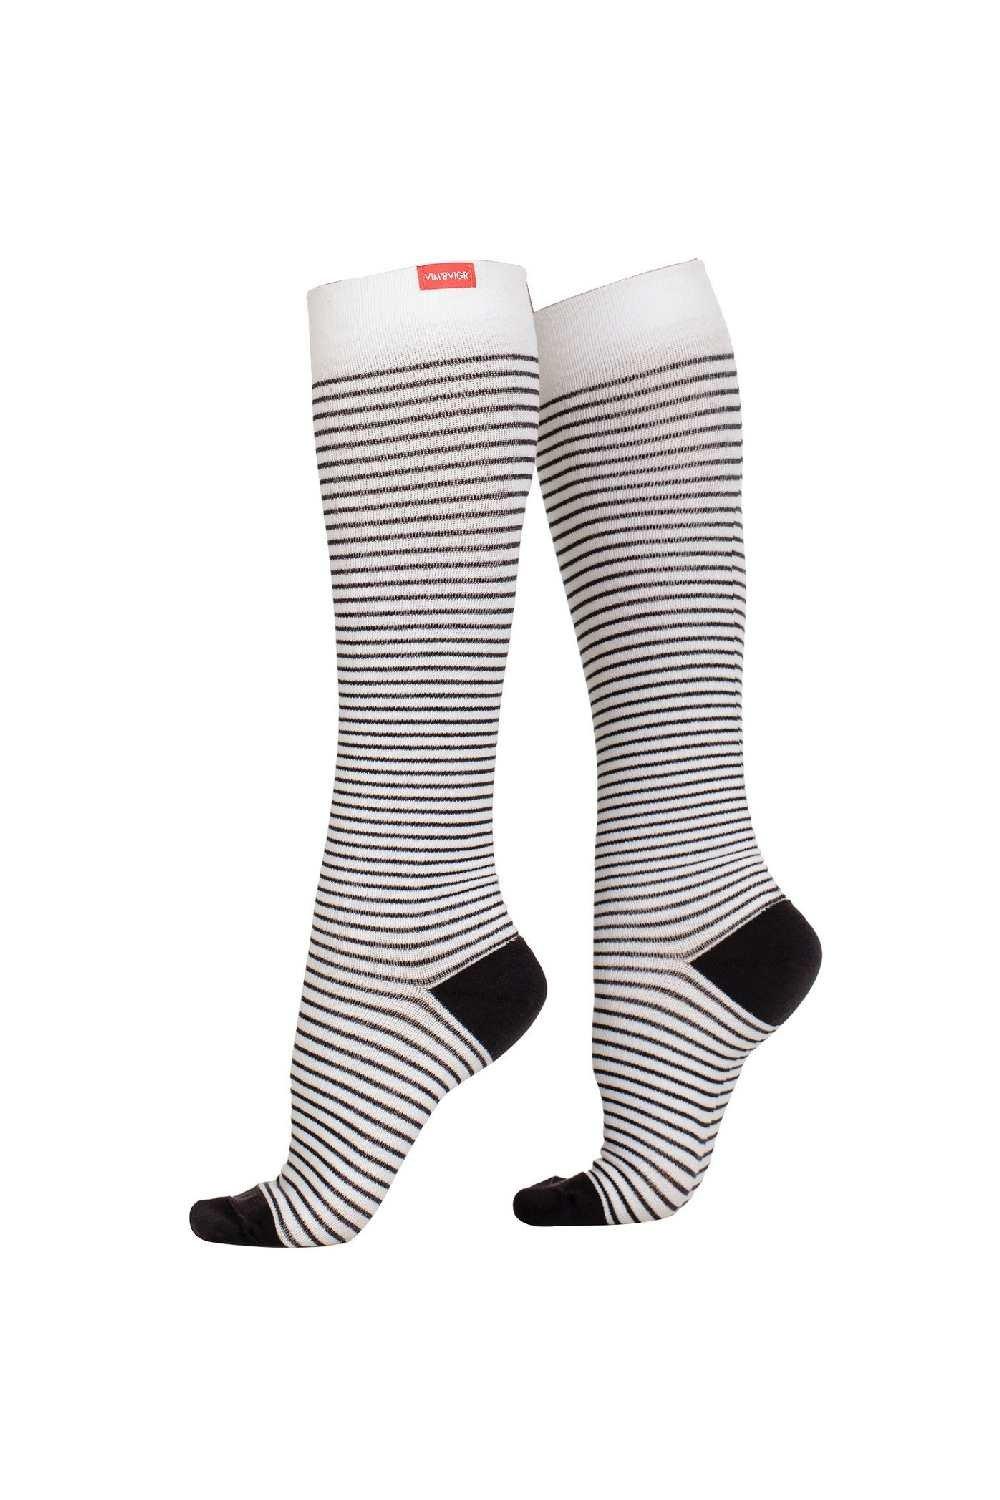 Wide Calf Graduated Compression Socks 30-40 mmhg for Swollen Legs